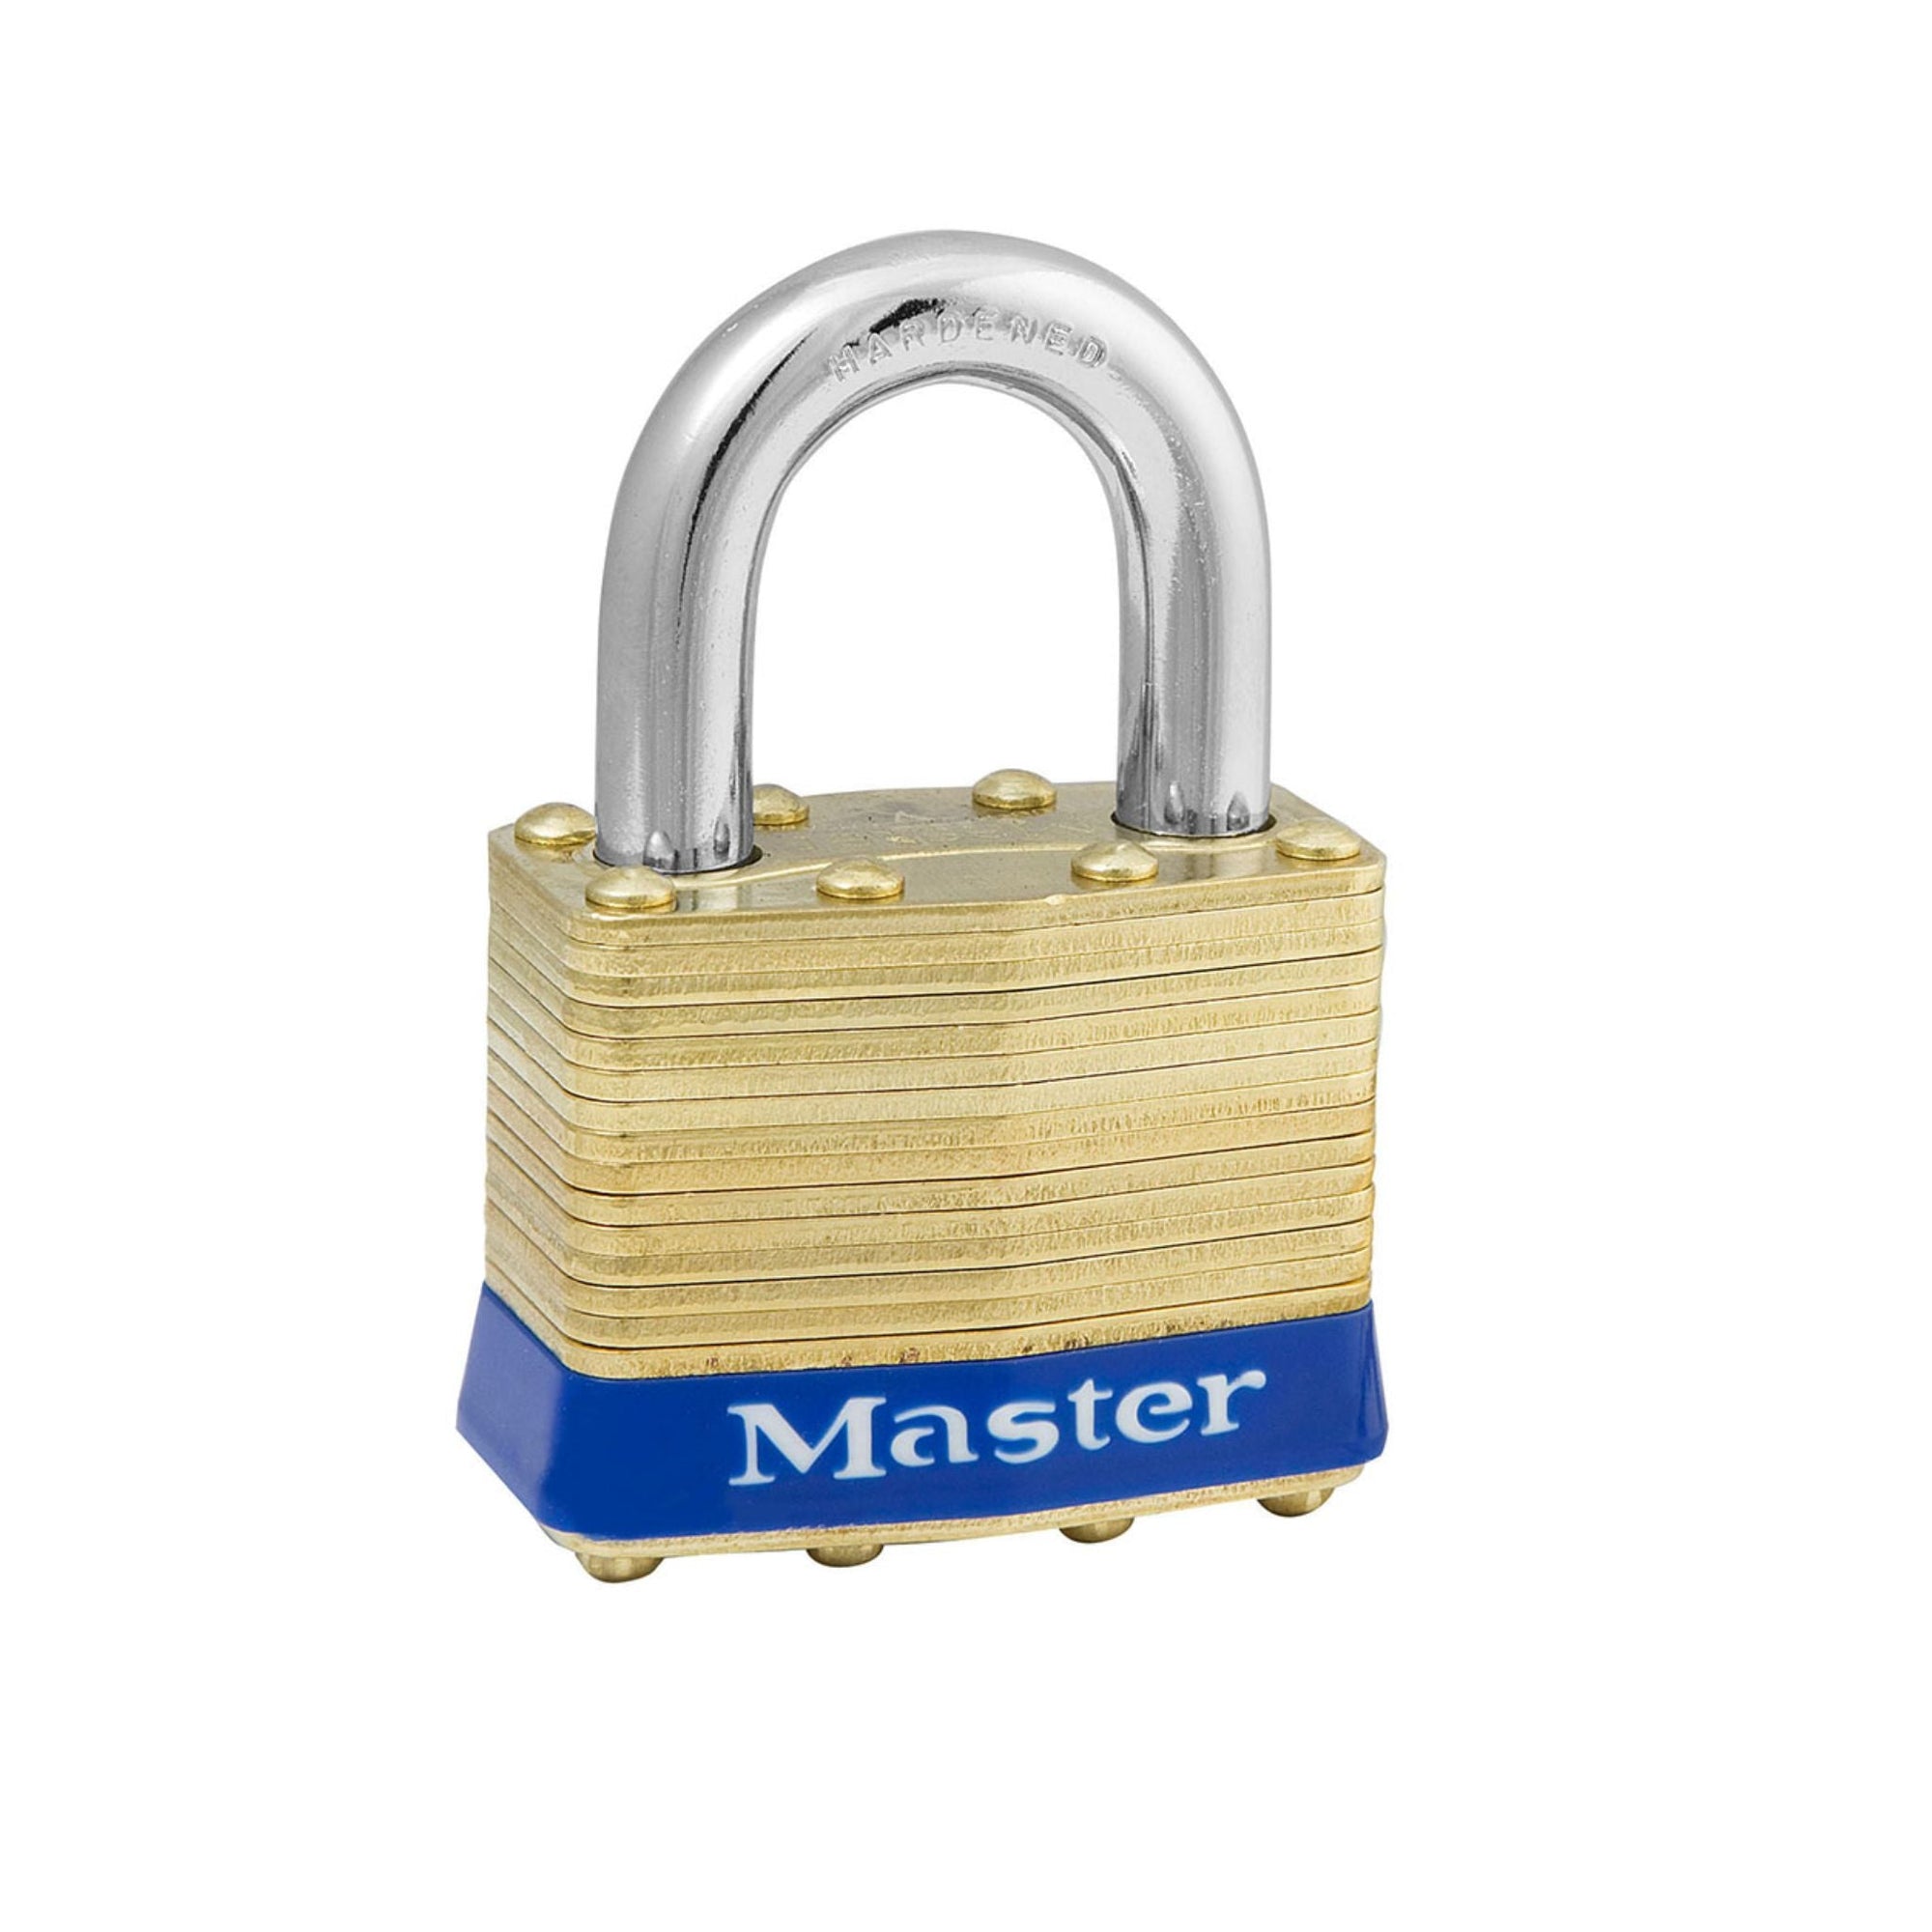 Master Lock 2KA 0311 Lock Laminated brass No. 2 Series Padlock Keyed to Match Existing Key Number KA0311 - The Lock Source